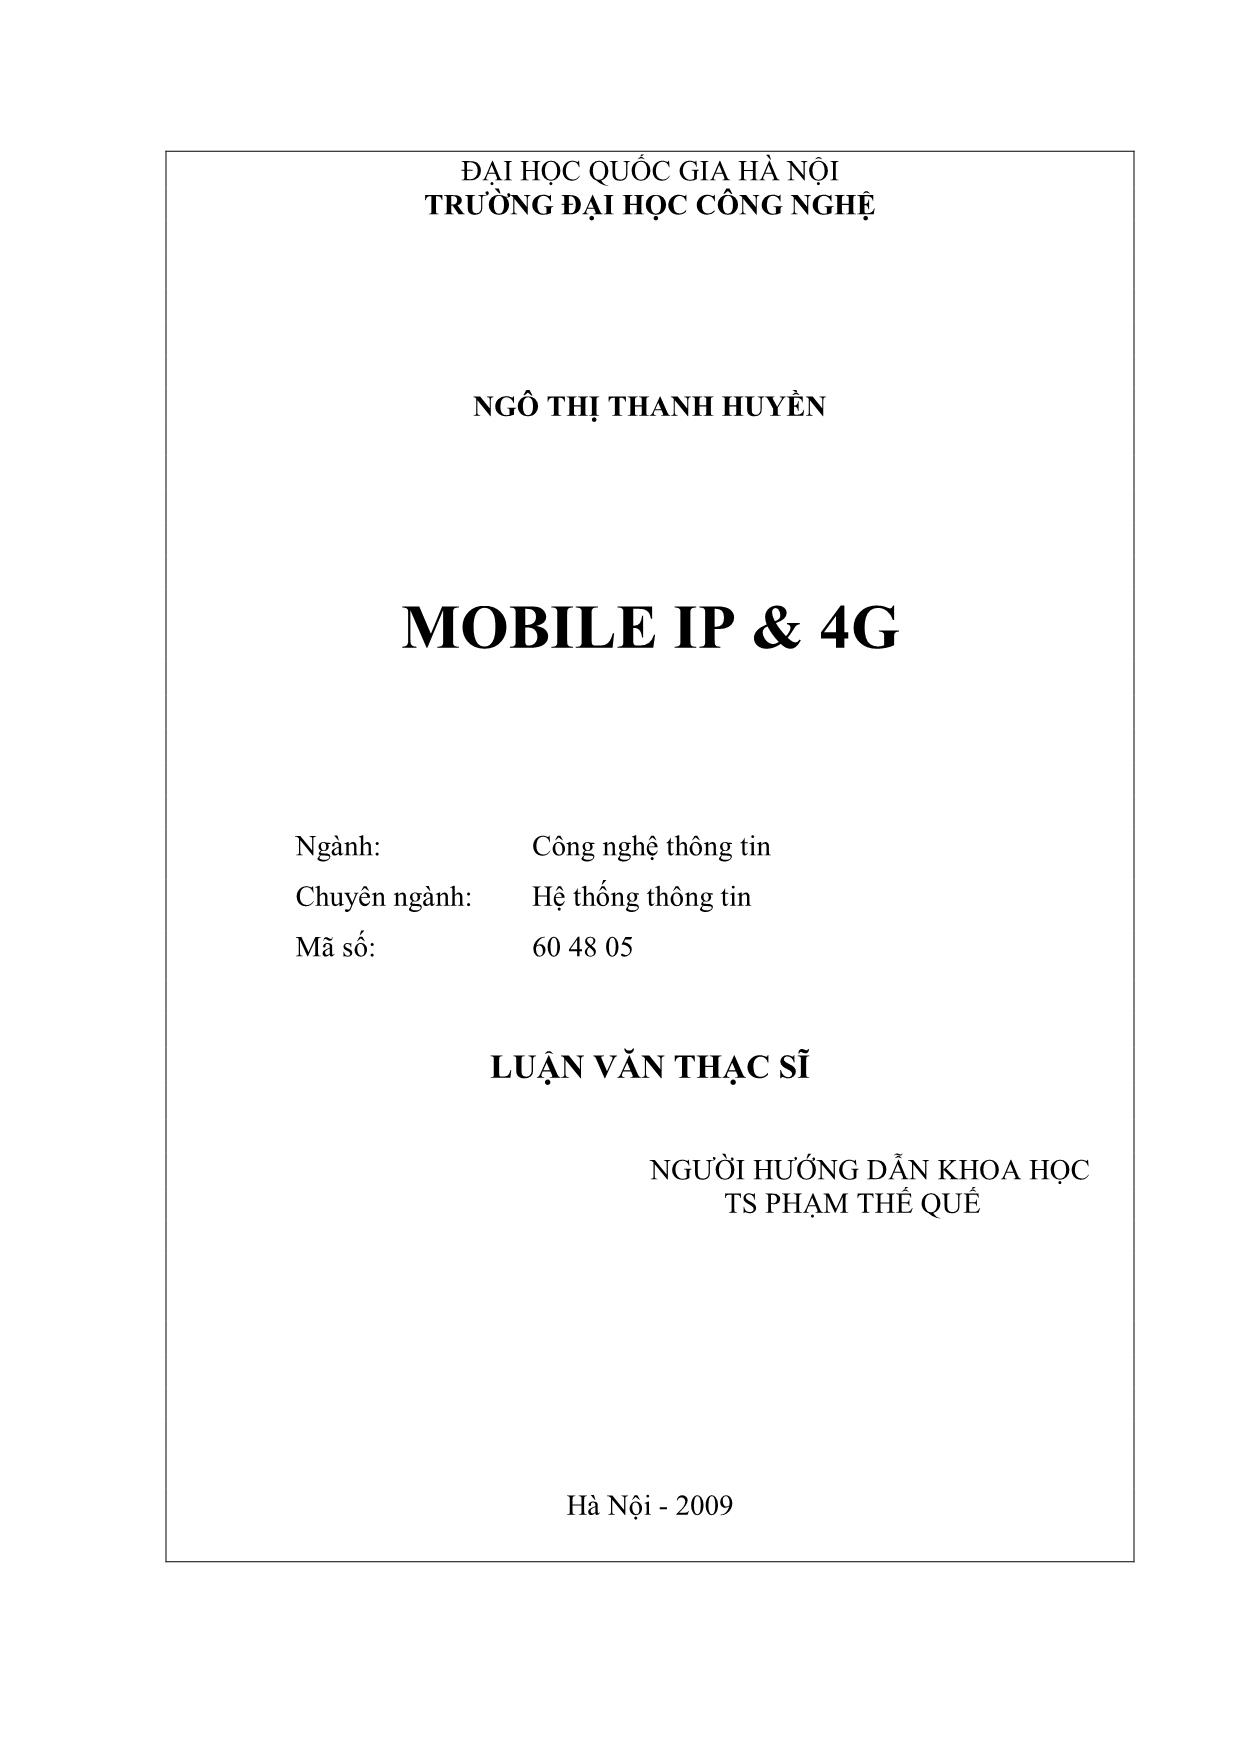 Luận văn Mobile IP & 4G trang 2